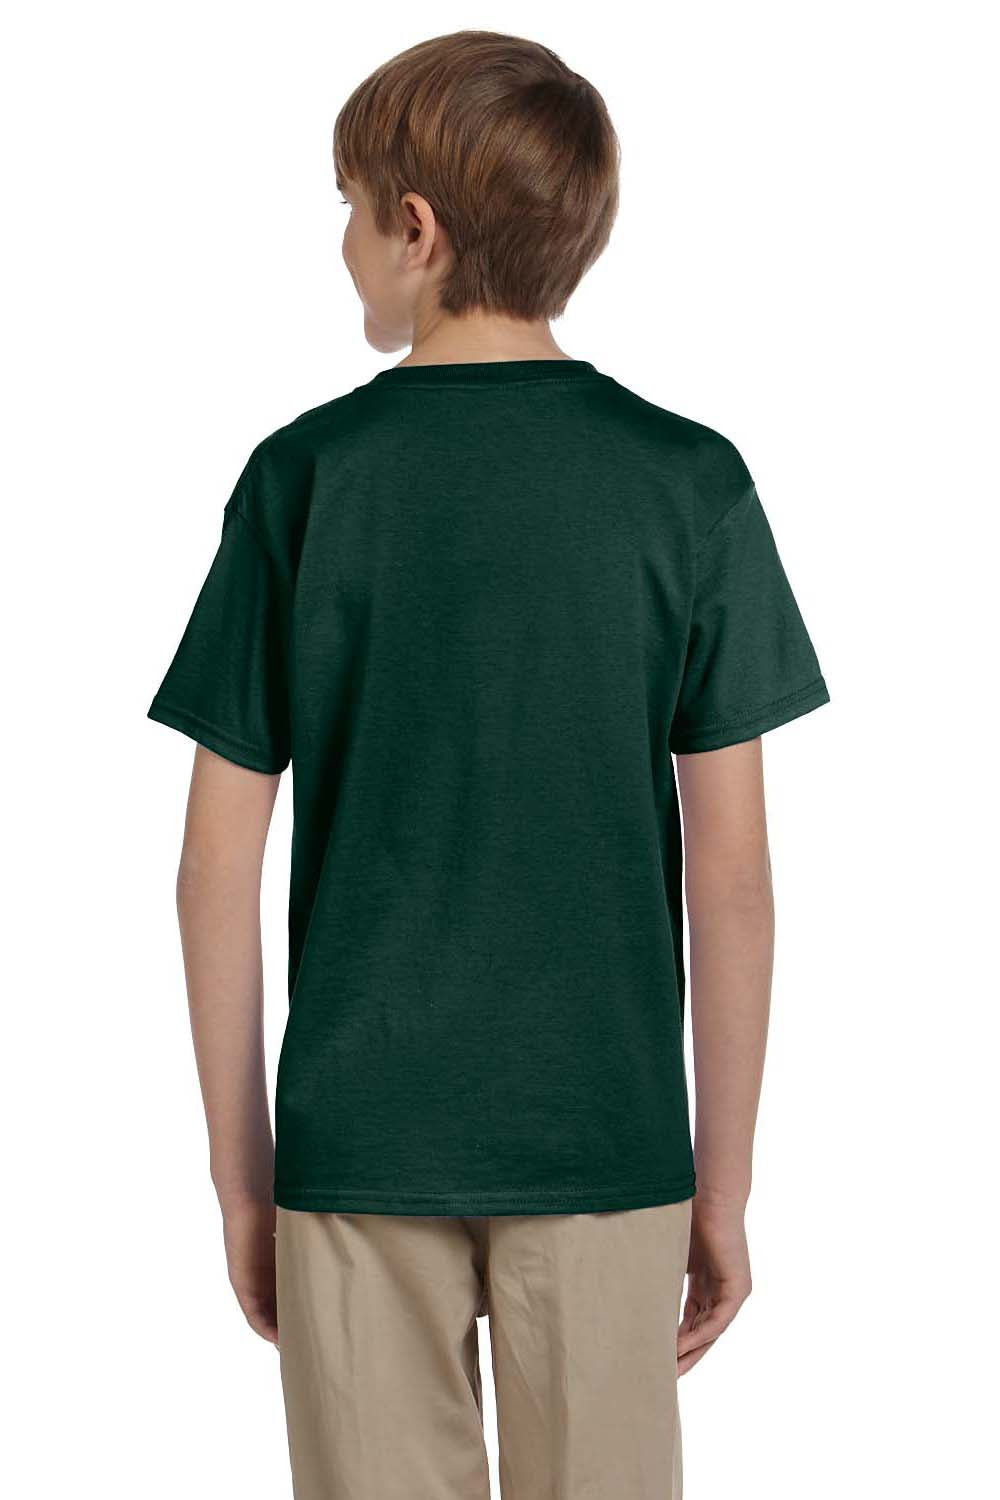 Hanes 5370 Youth EcoSmart Short Sleeve Crewneck T-Shirt Forest Green Back